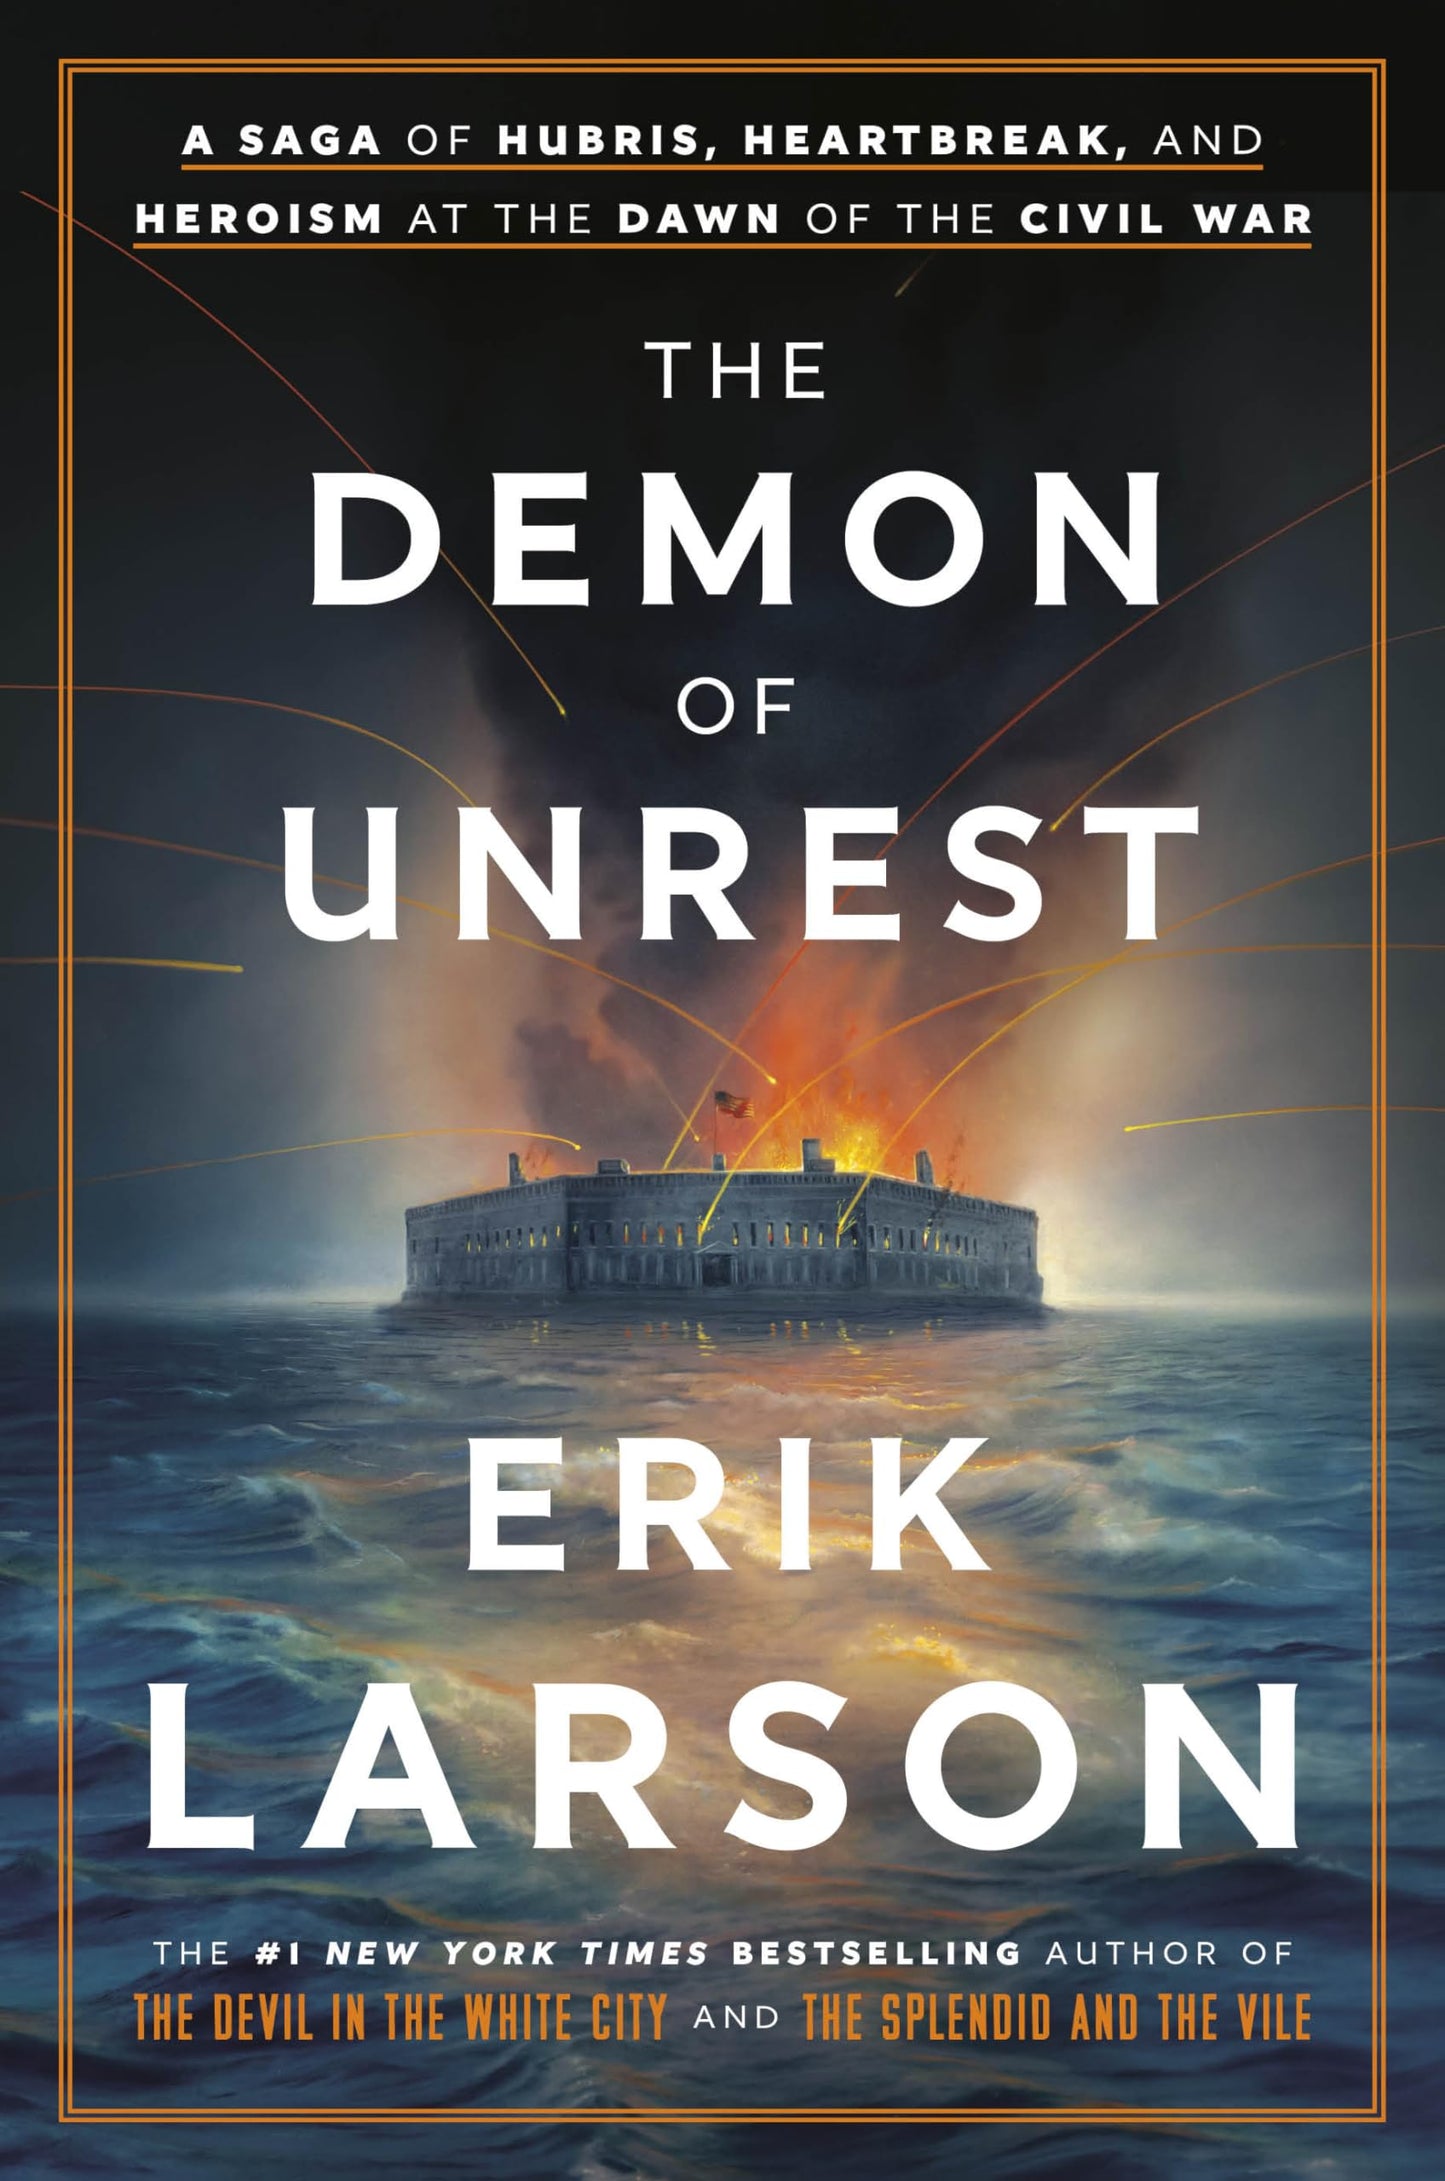 The Demon of Unrest by Erik Larson (PREORDER April 30)